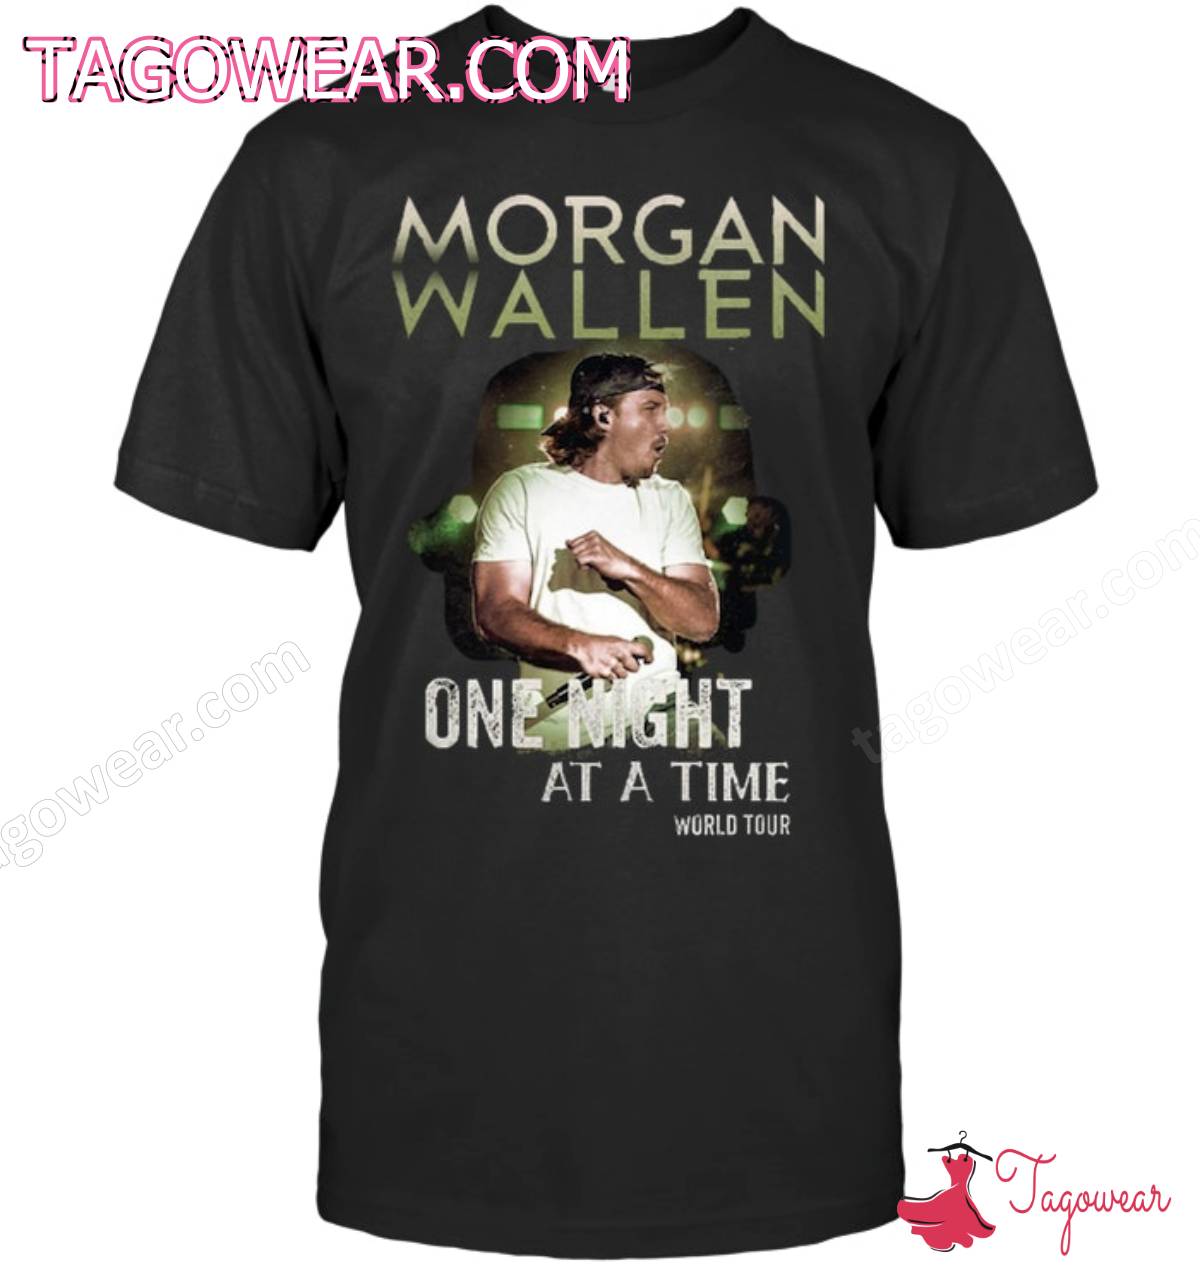 Morgan Wallen One Night At A Time World Tour Shirt